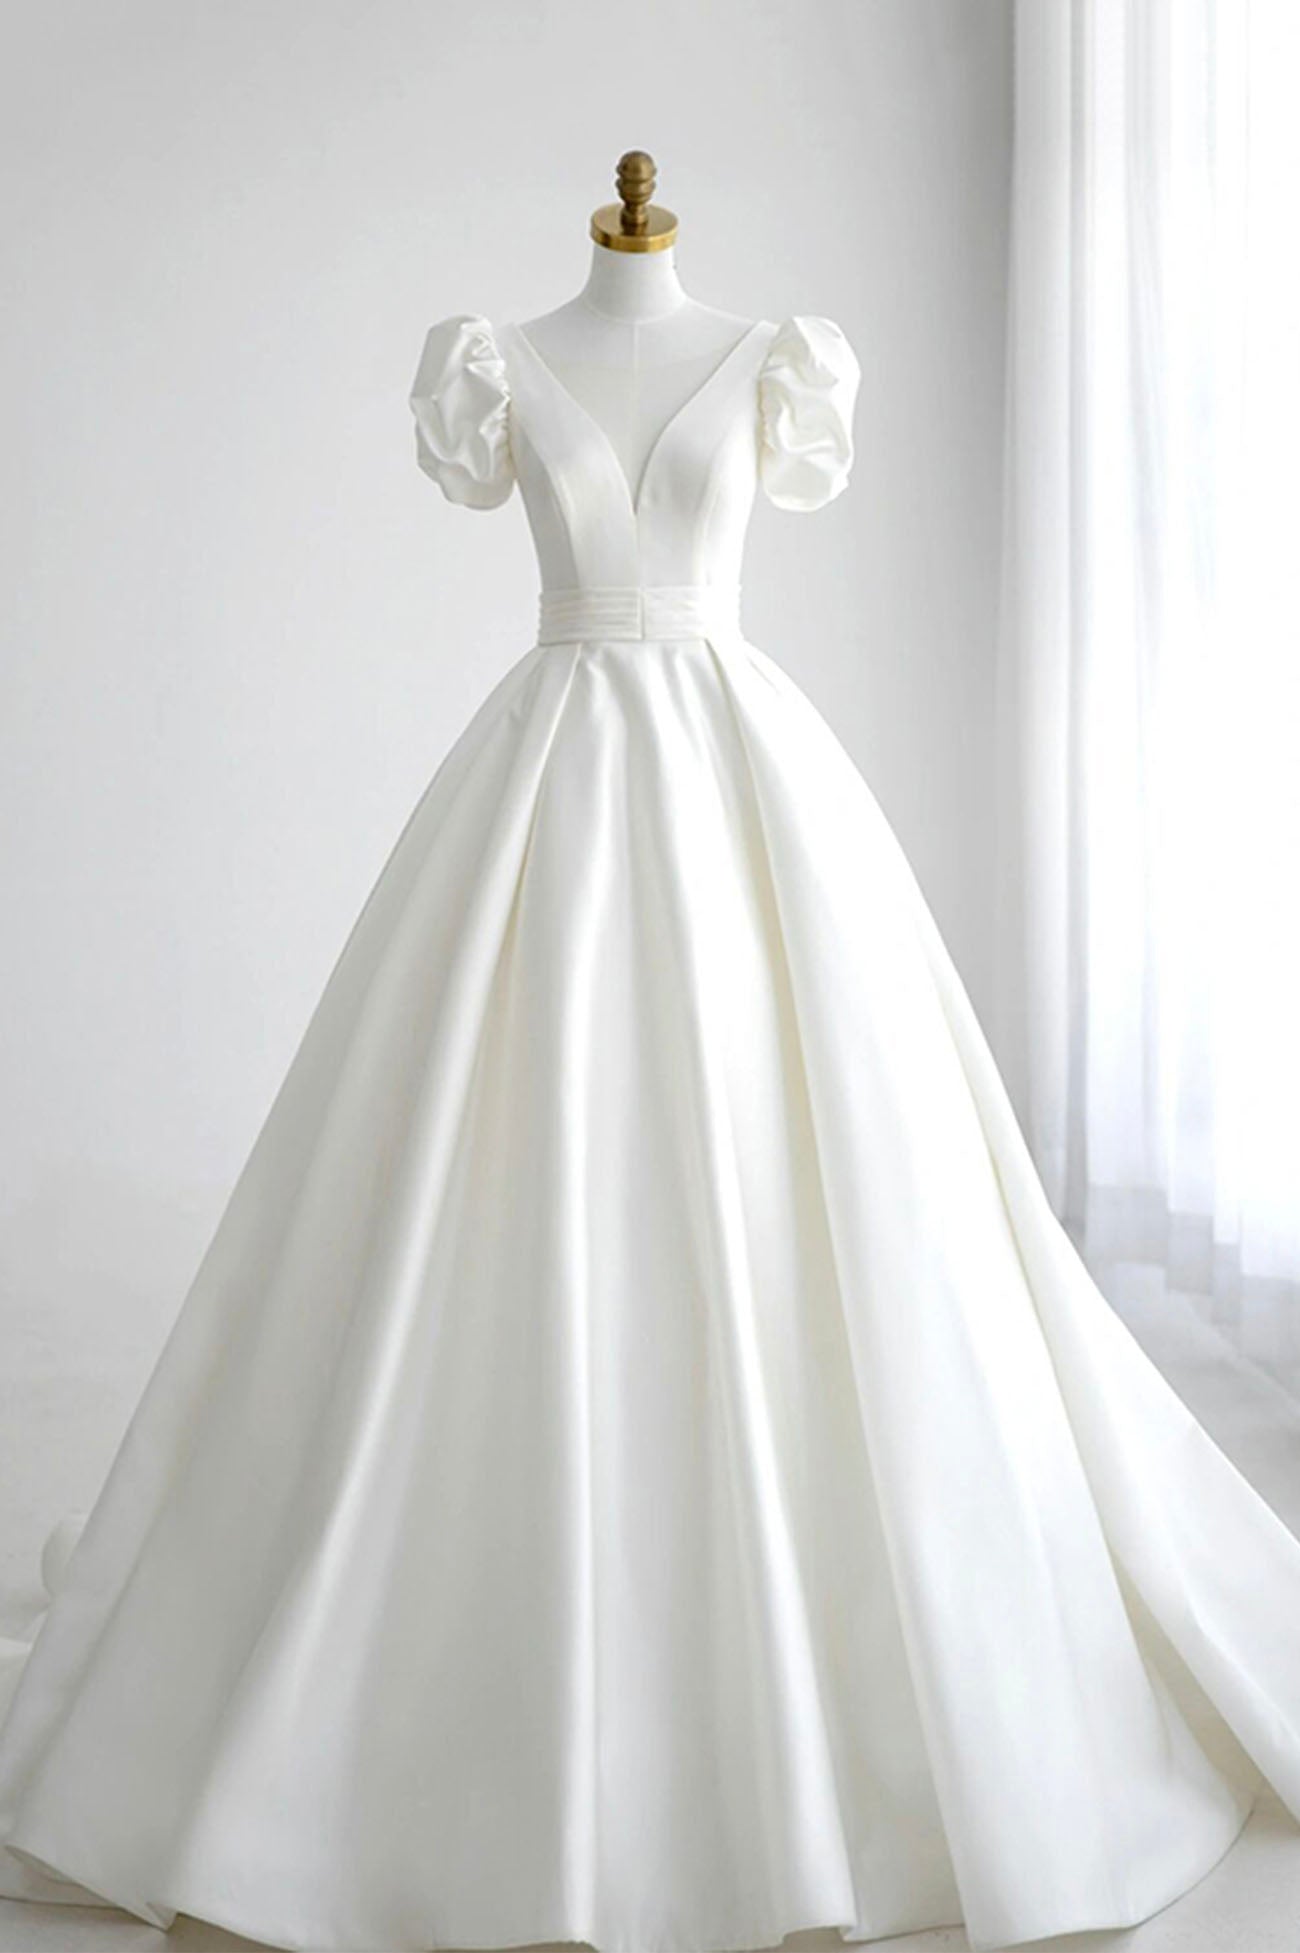 White V-Neck Satin Long Prom Dress Outfits For Girls, A-Line Short Sleeve Formal Dress